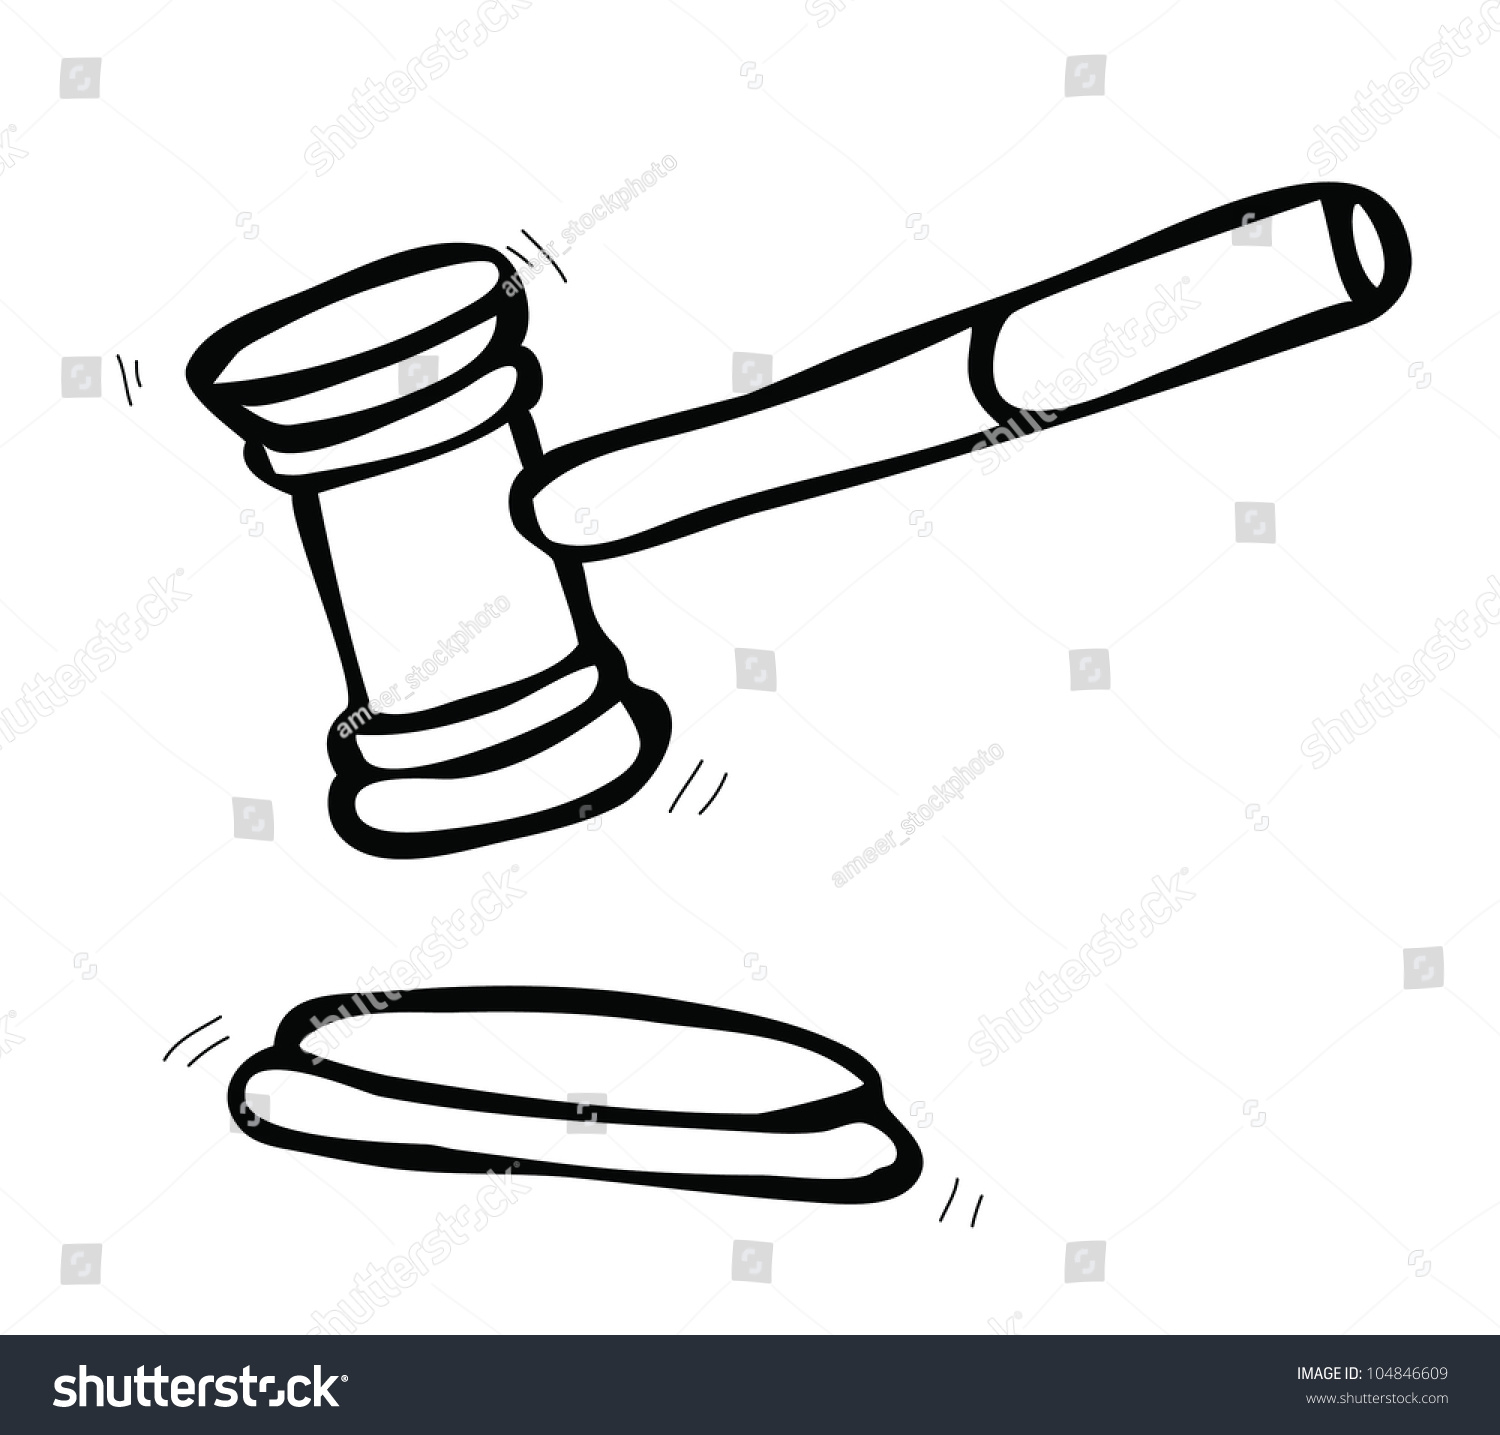 How To Draw A Judge Hammer Hammer Judge Vector Shutterstock Hubsristes